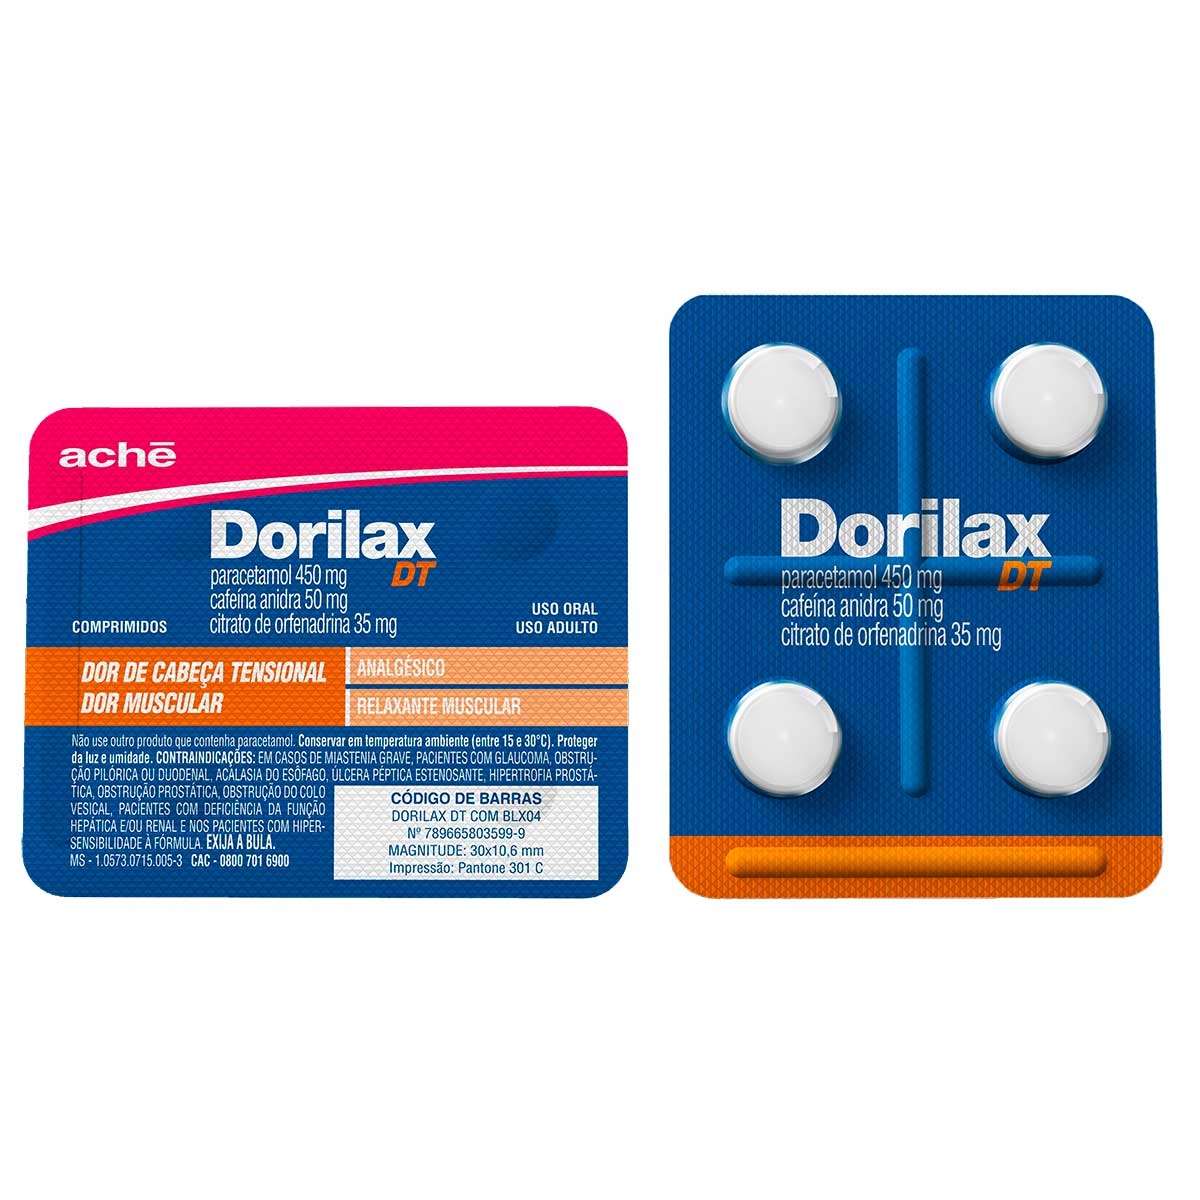 Dorilax DT Paracetamol 450mg + Cafeína Anidra 50mg + Citrato de Orfenadrina 35mg 4 comprimidos